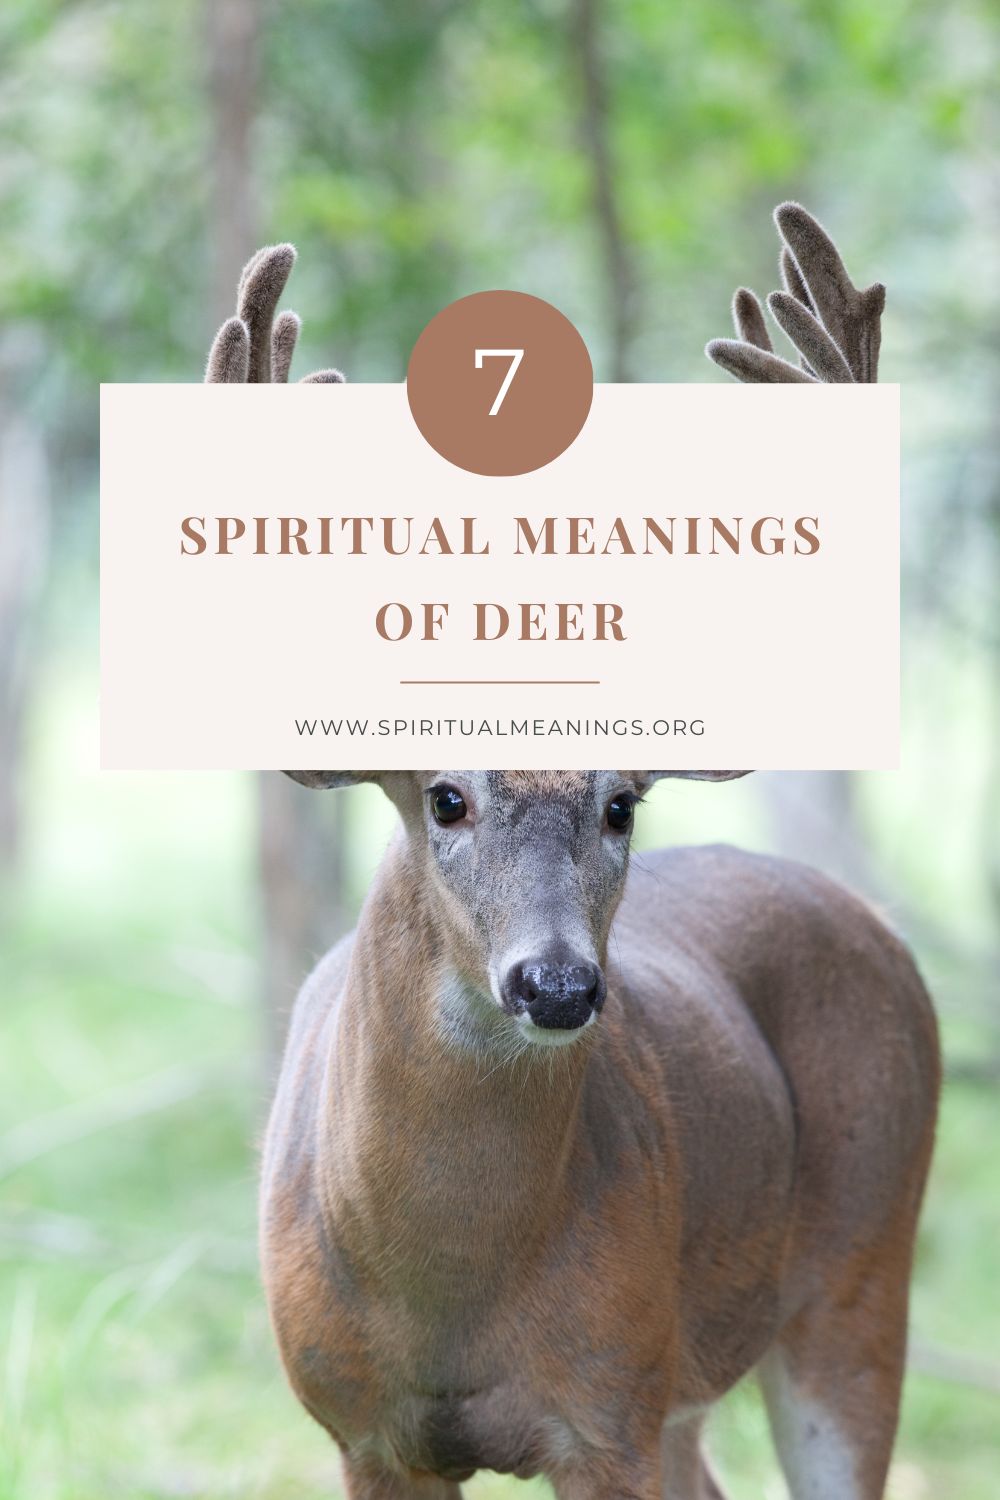 Focusing on the True Deer Spiritual Meaning